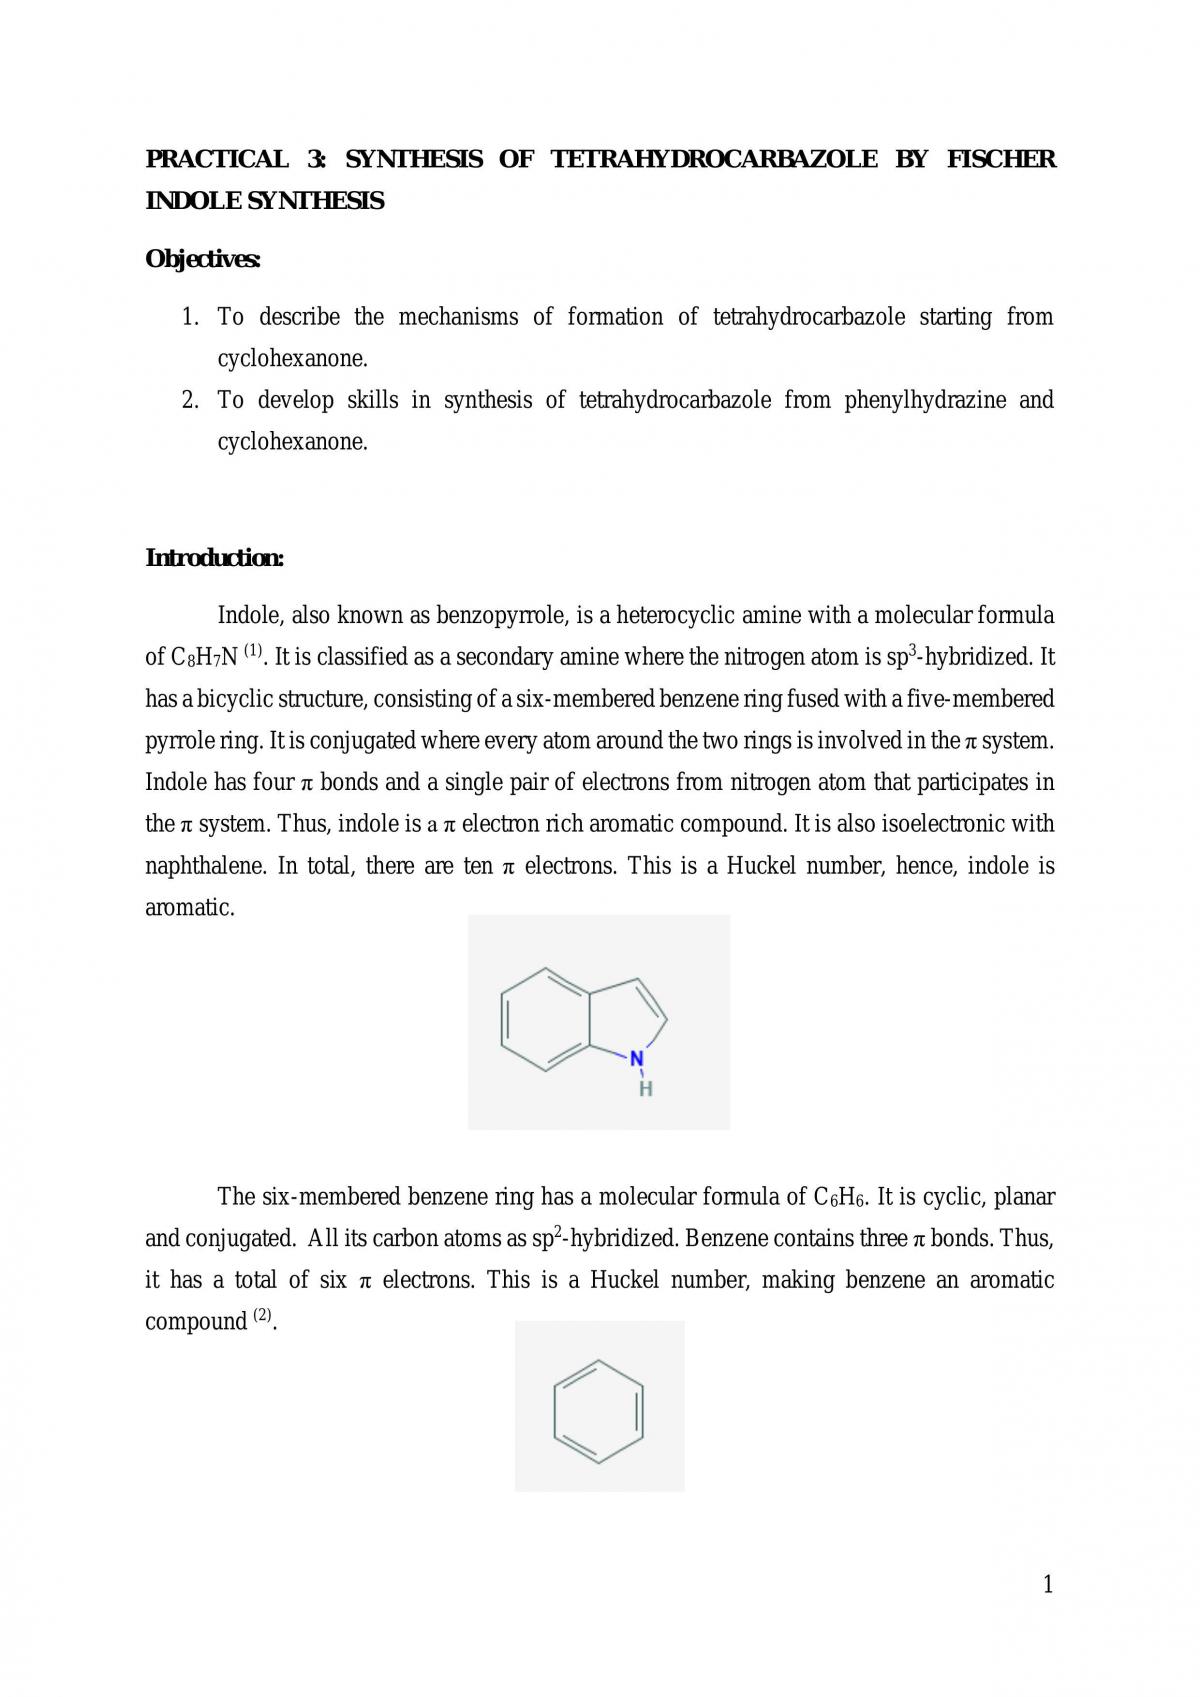 Trifluoroethanol-promoted ring-opening cyclization of 4-(2-oxiranylmethoxy) indoles: access to 4,5-fused indoles - Organic & Biomolecular Chemistry  (RSC Publishing) DOI:10.1039/D1OB01030A